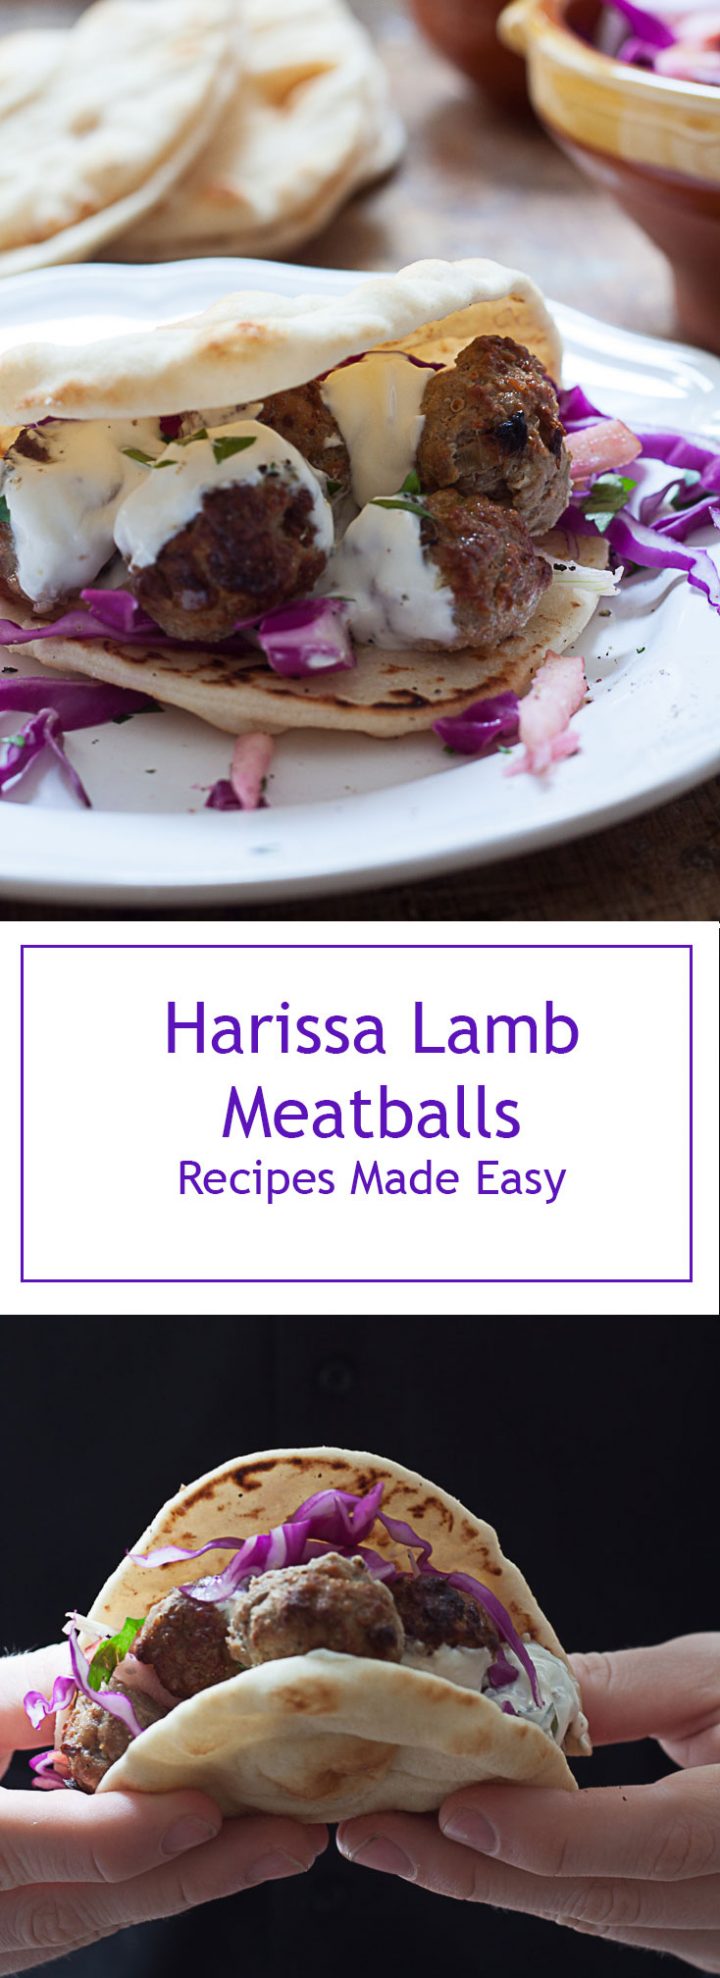 Harissa Lamb Meatballs | Recipes Made Easy